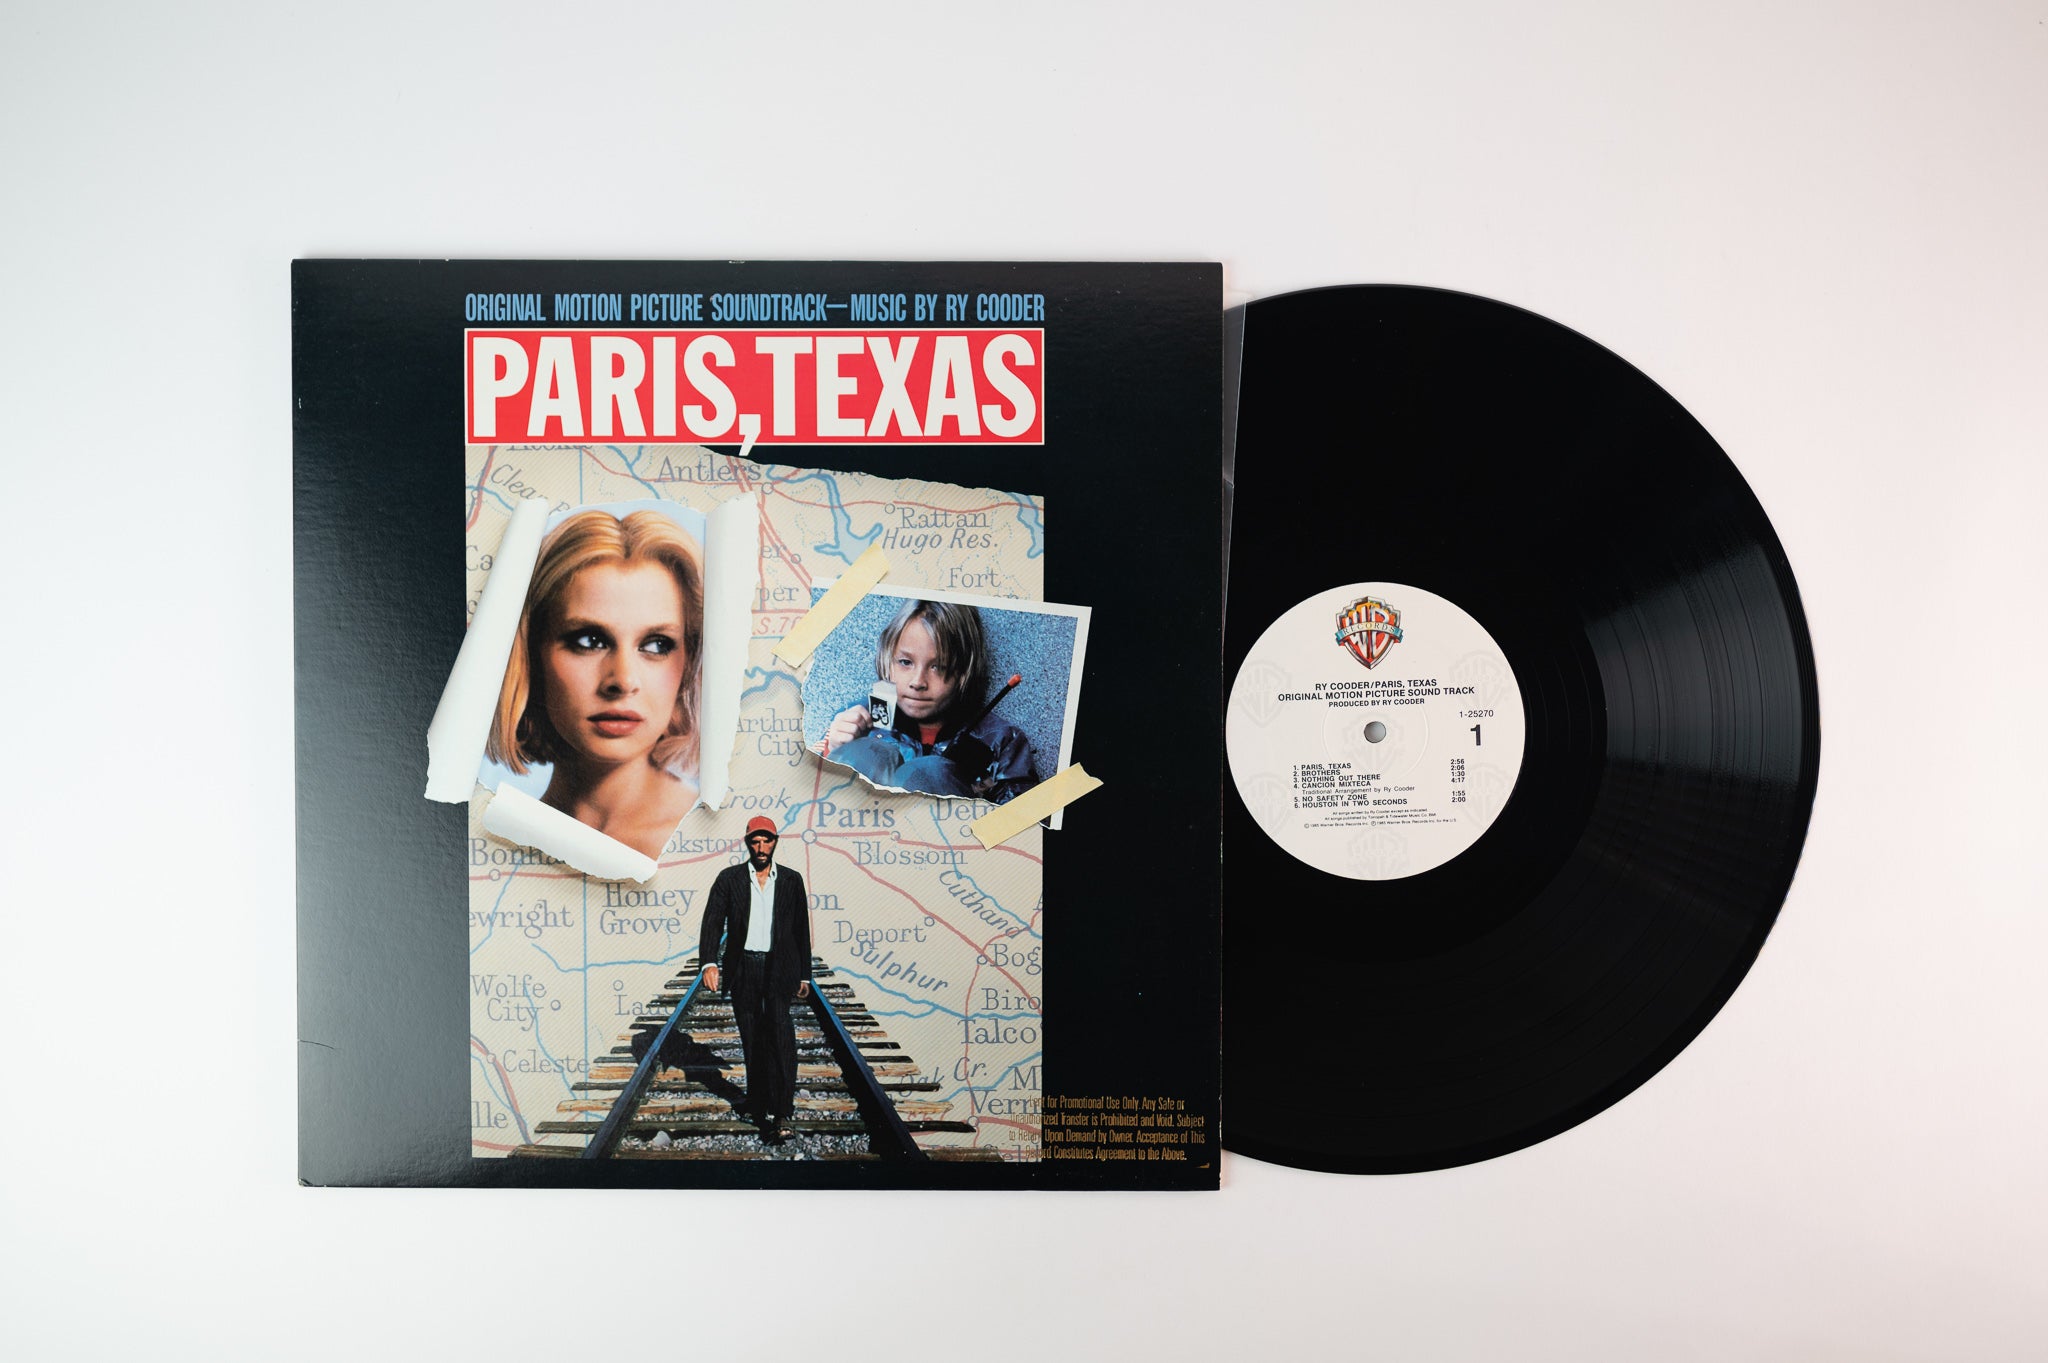 Ry Cooder - Paris, Texas (Original Motion Picture Soundtrack) on Warner Bros.